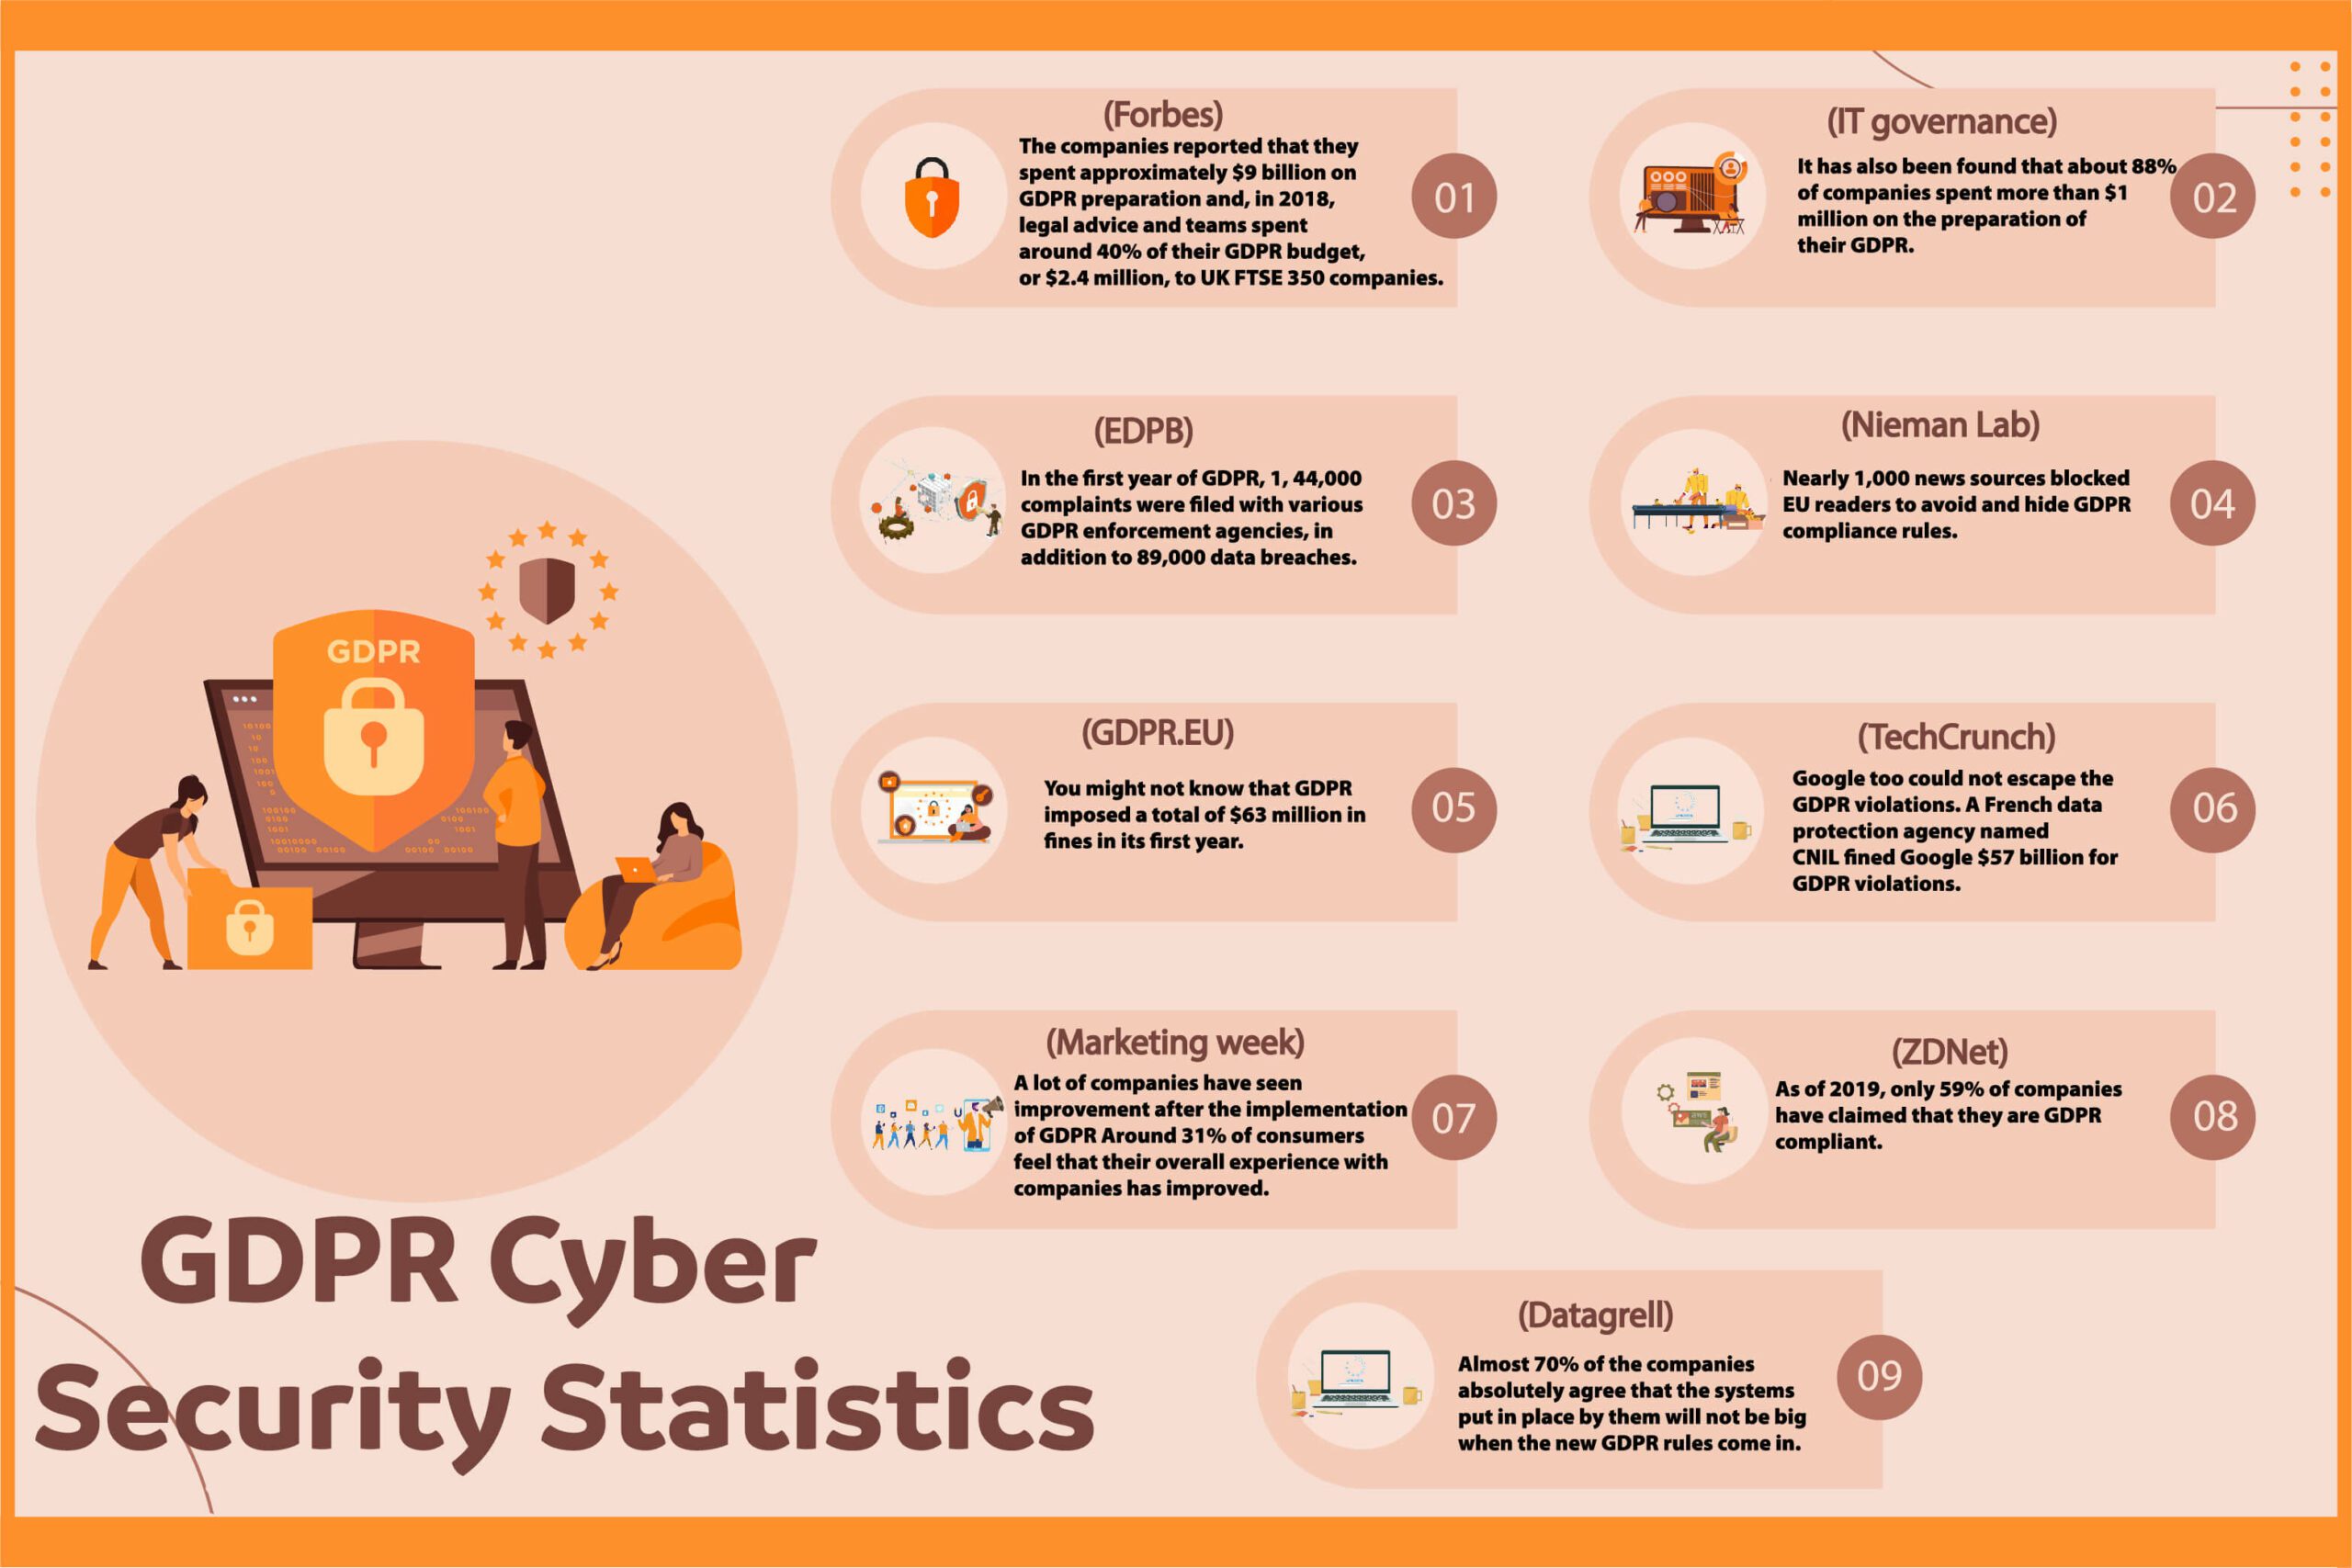 GDPR Cybersecurity Statistics